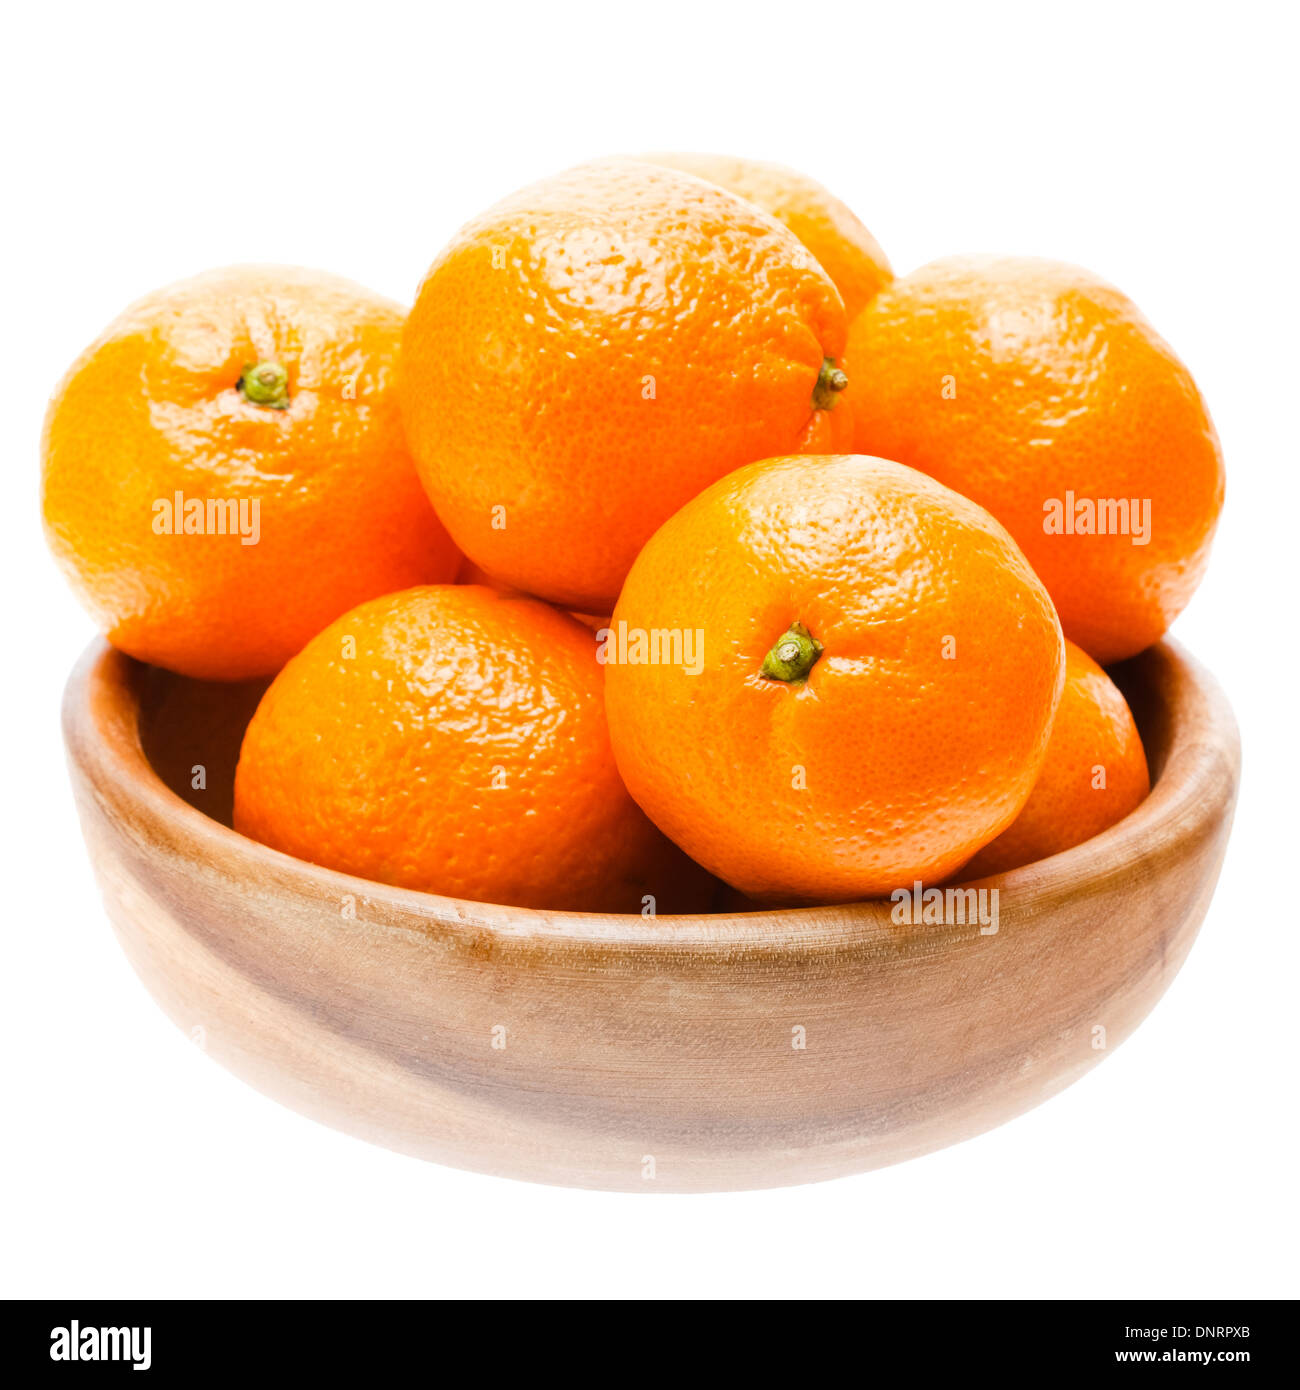 Tasty Sweet Tangerine Orange Mandarin Mandarine Fruit In Wooden Bowl  Isolated On White Background Stock Photo - Alamy